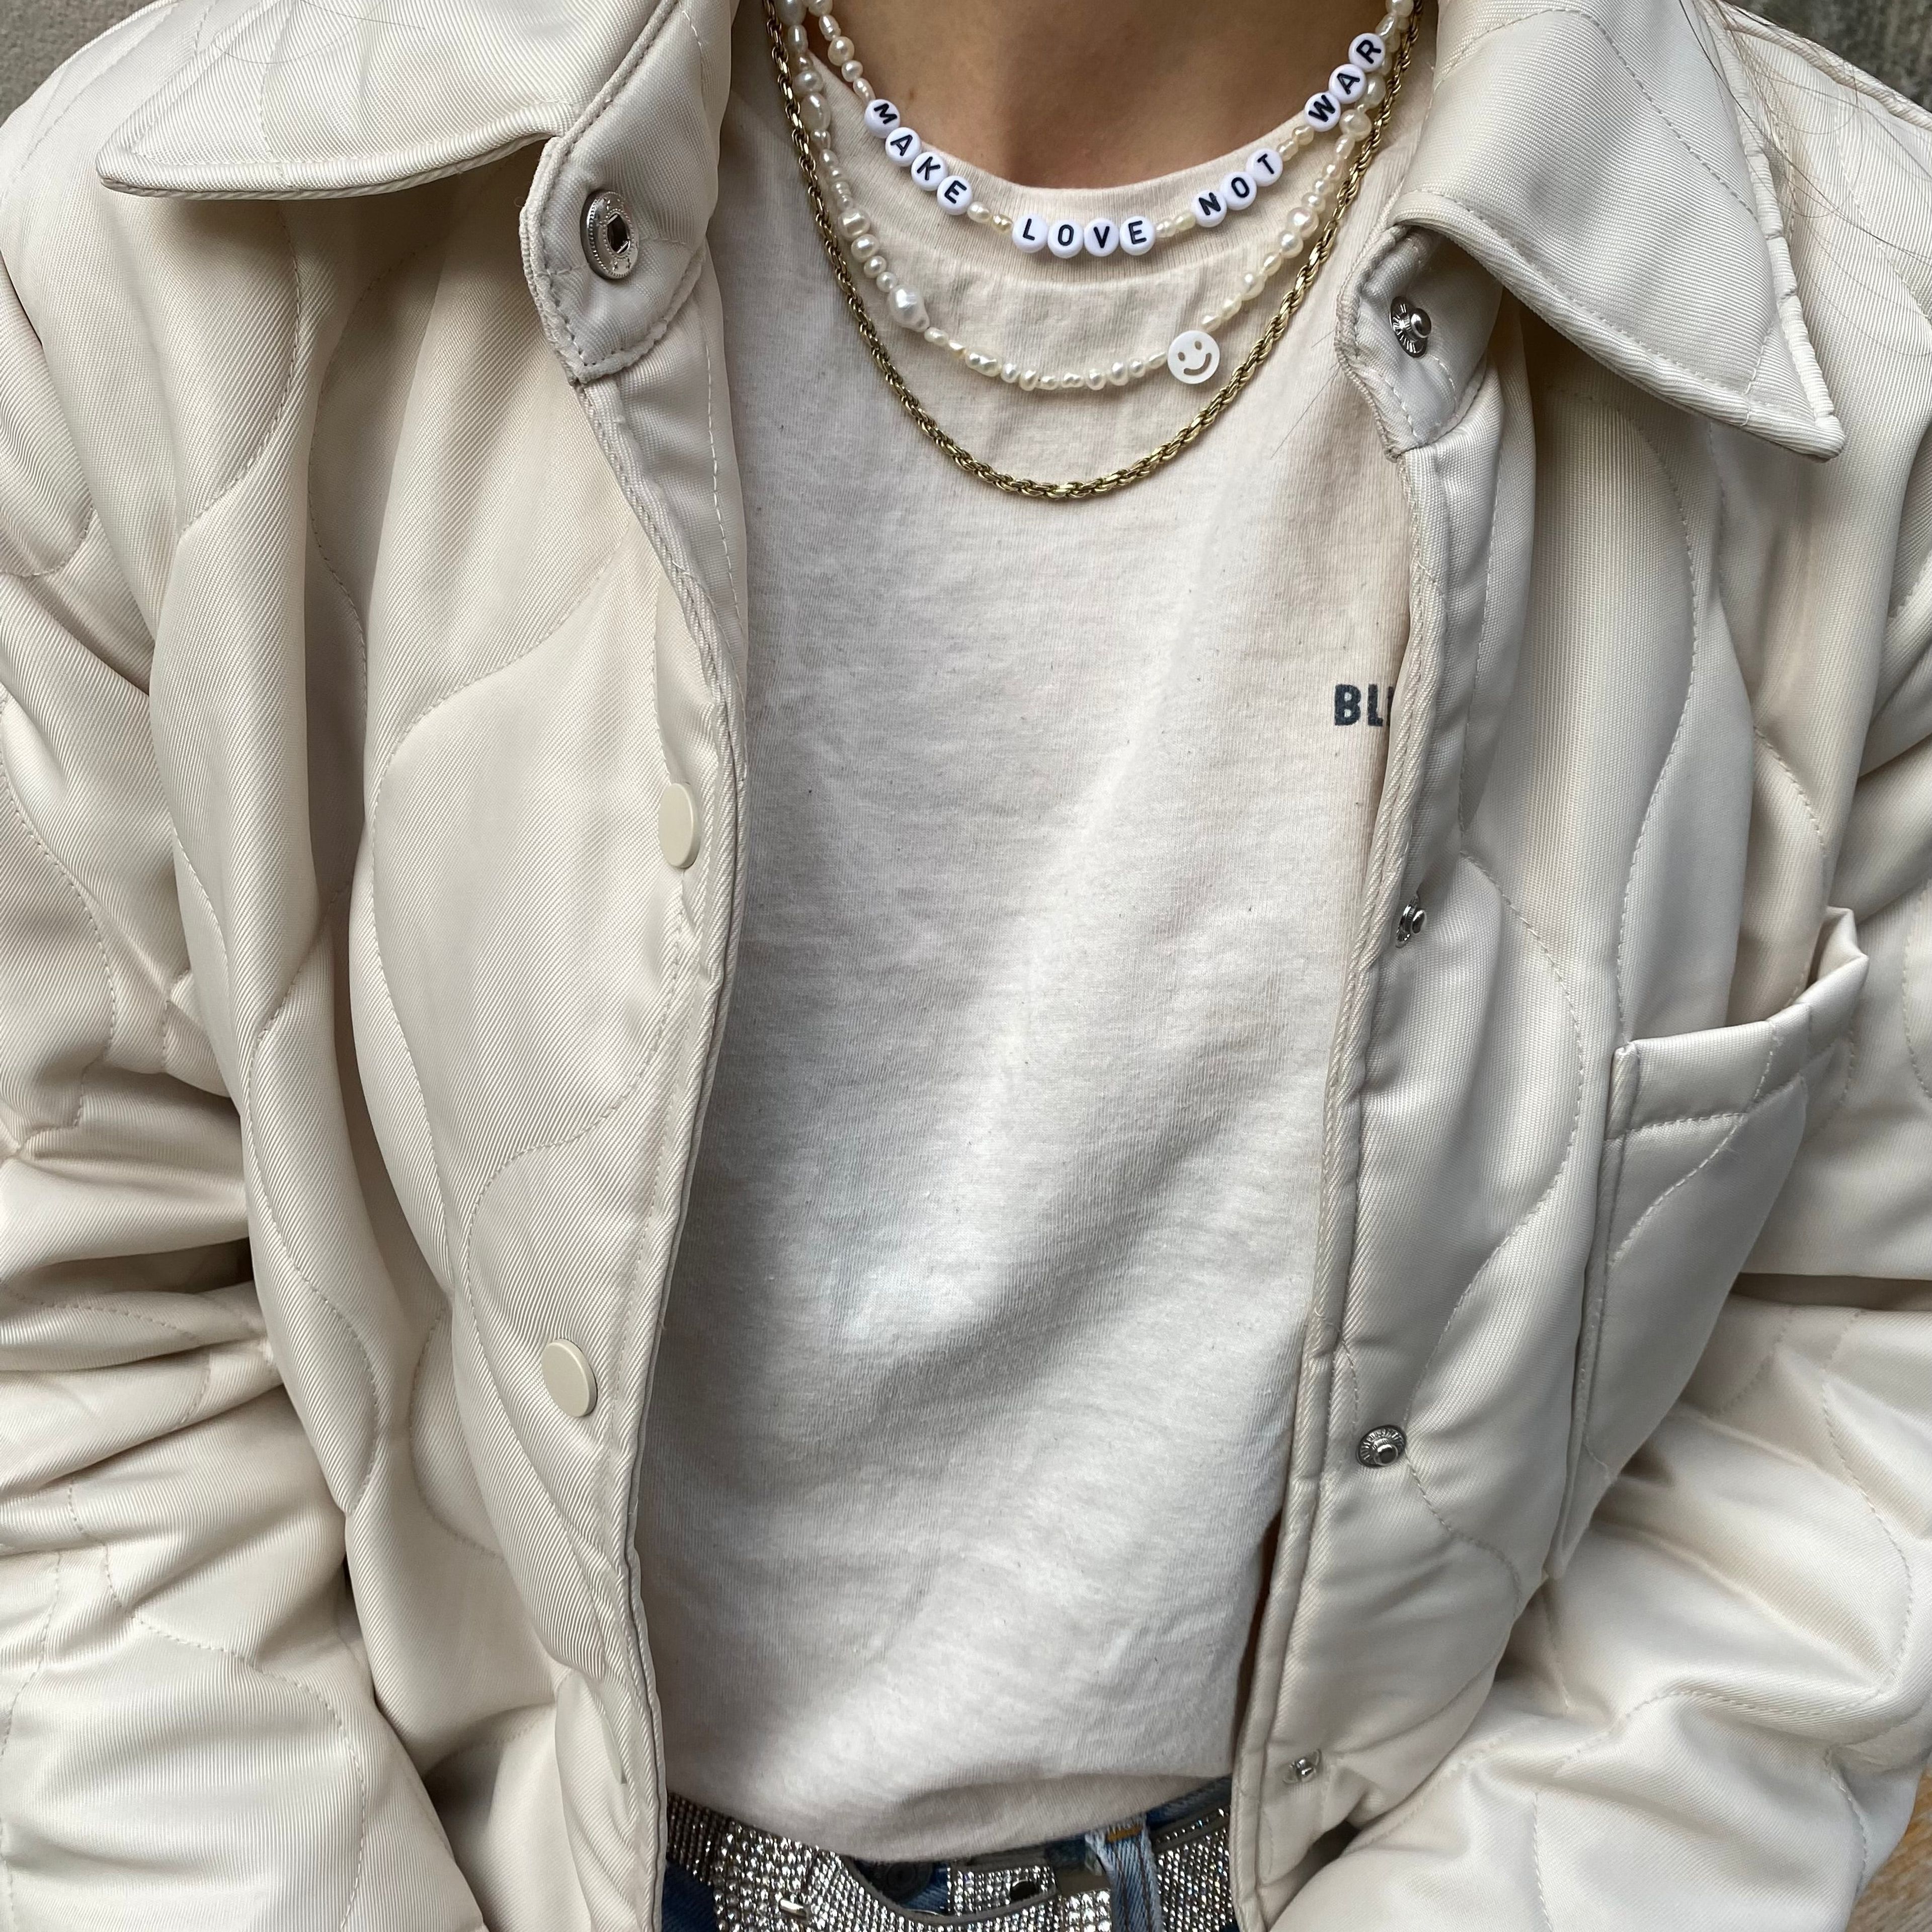 Billie necklace